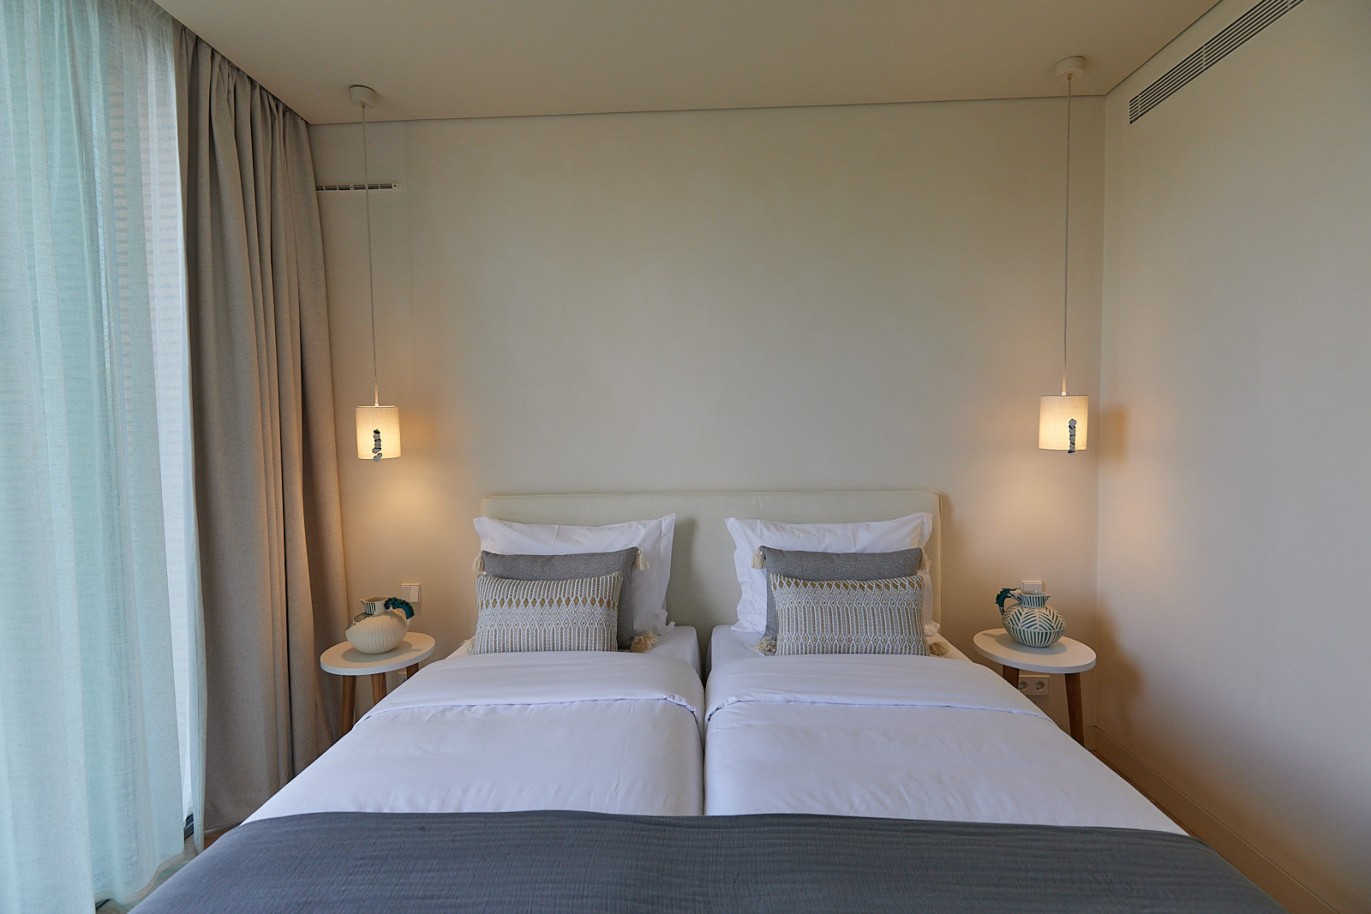 2 bedroom apartment in resort, for sale in Porches, Algarve_230677